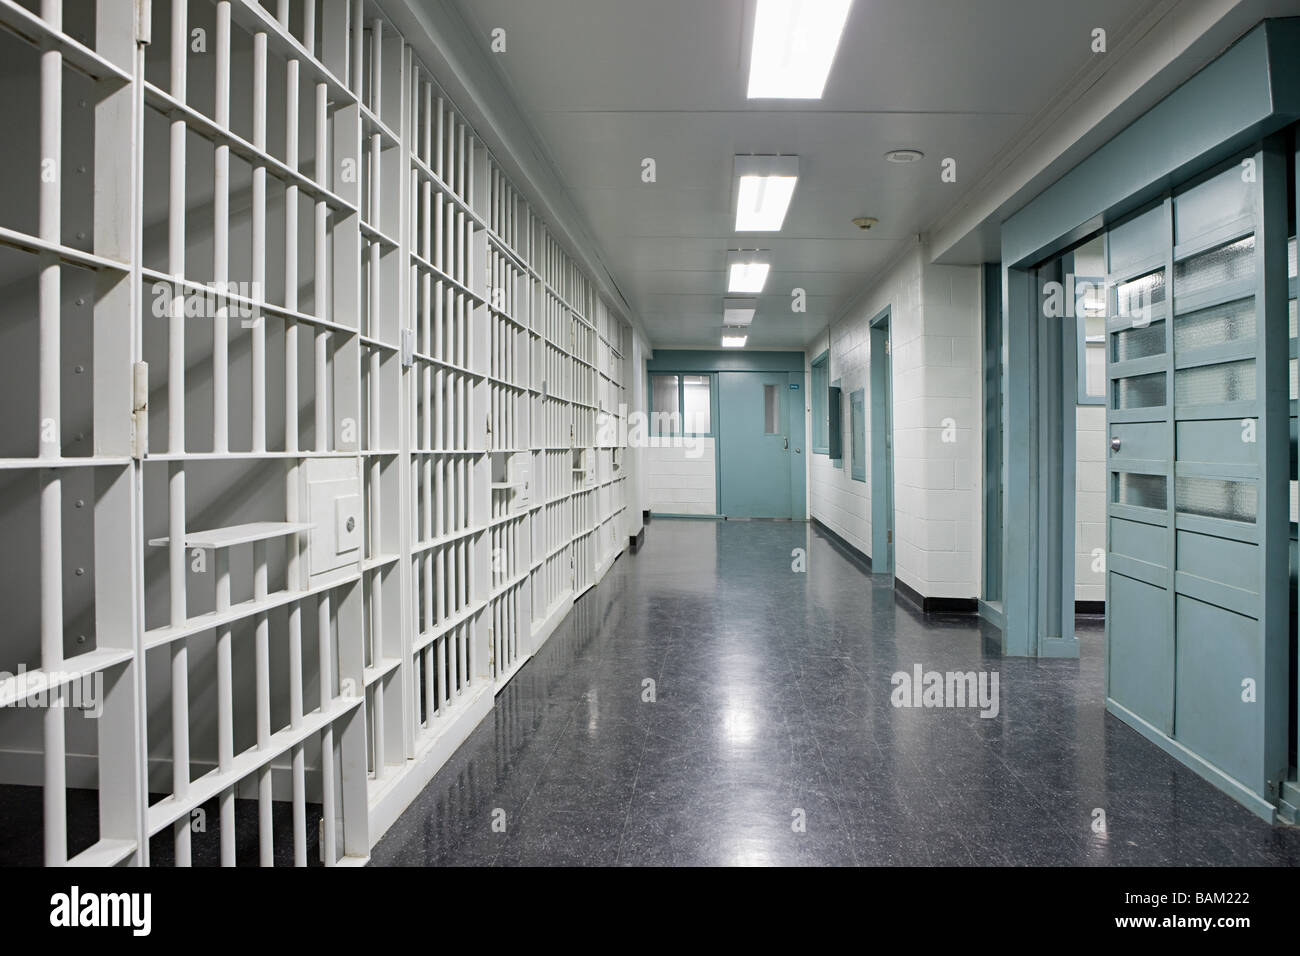 Prison corridor Stock Photo